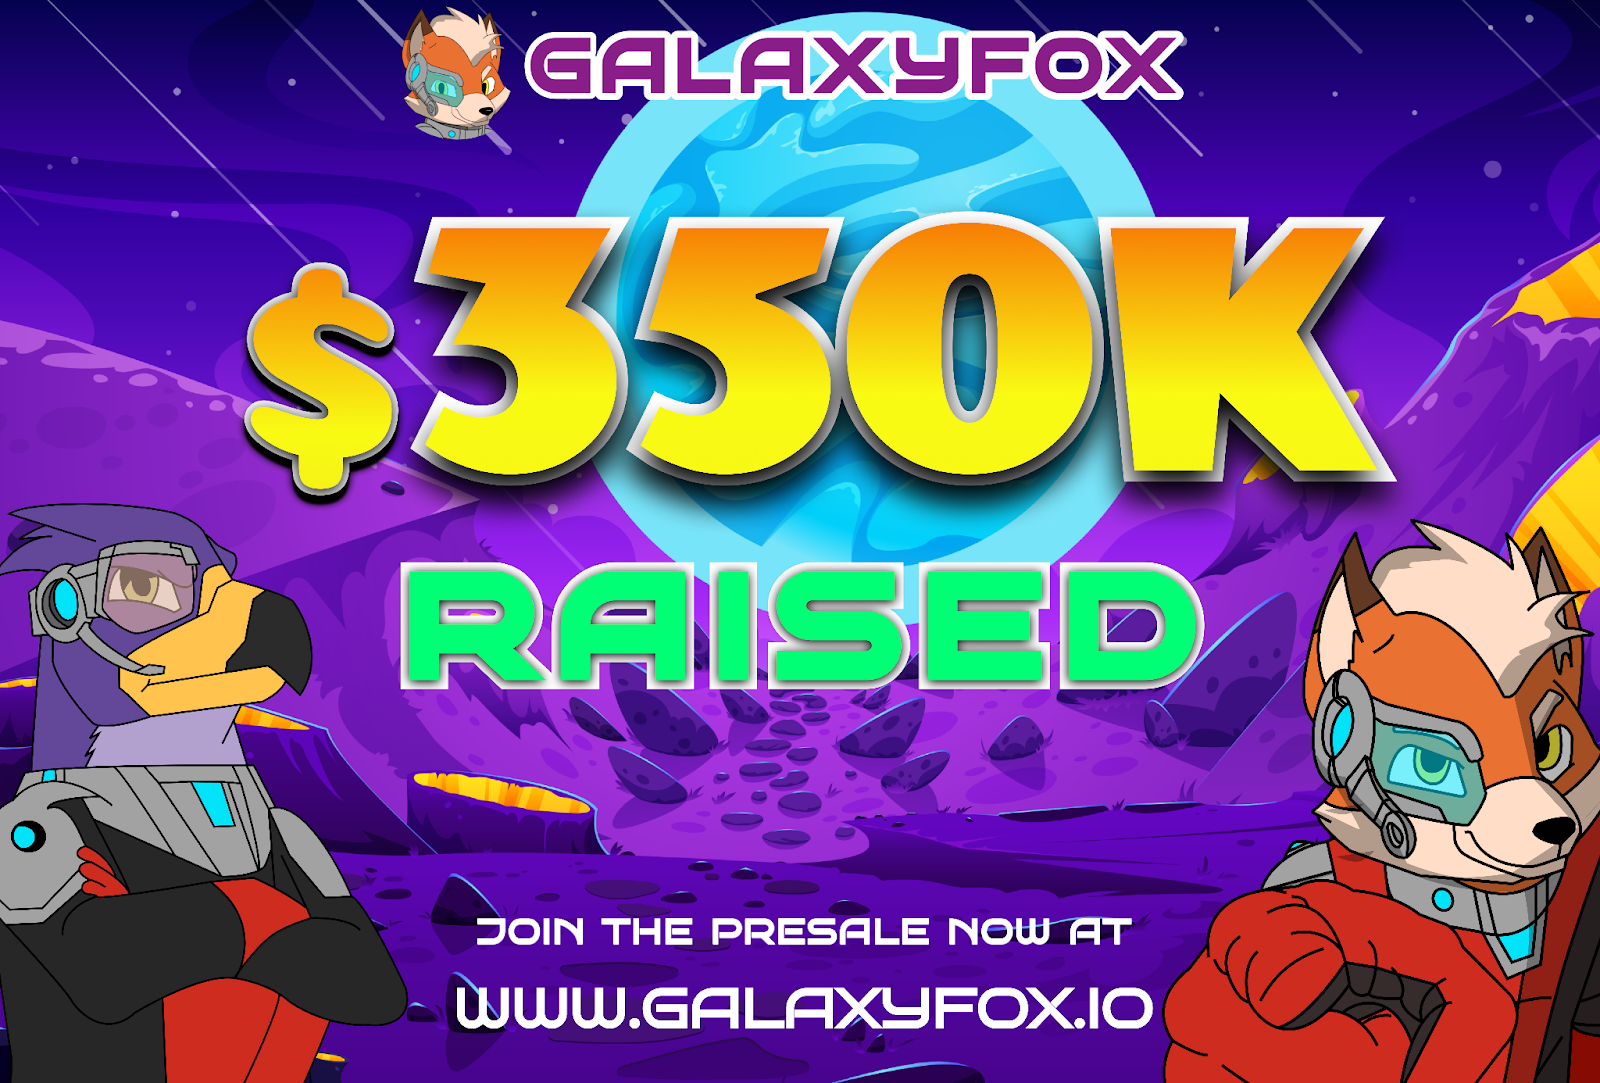 Major Meme Coin Struggles While Galaxy Fox is in Bullish Mode, Surpassing $350K!